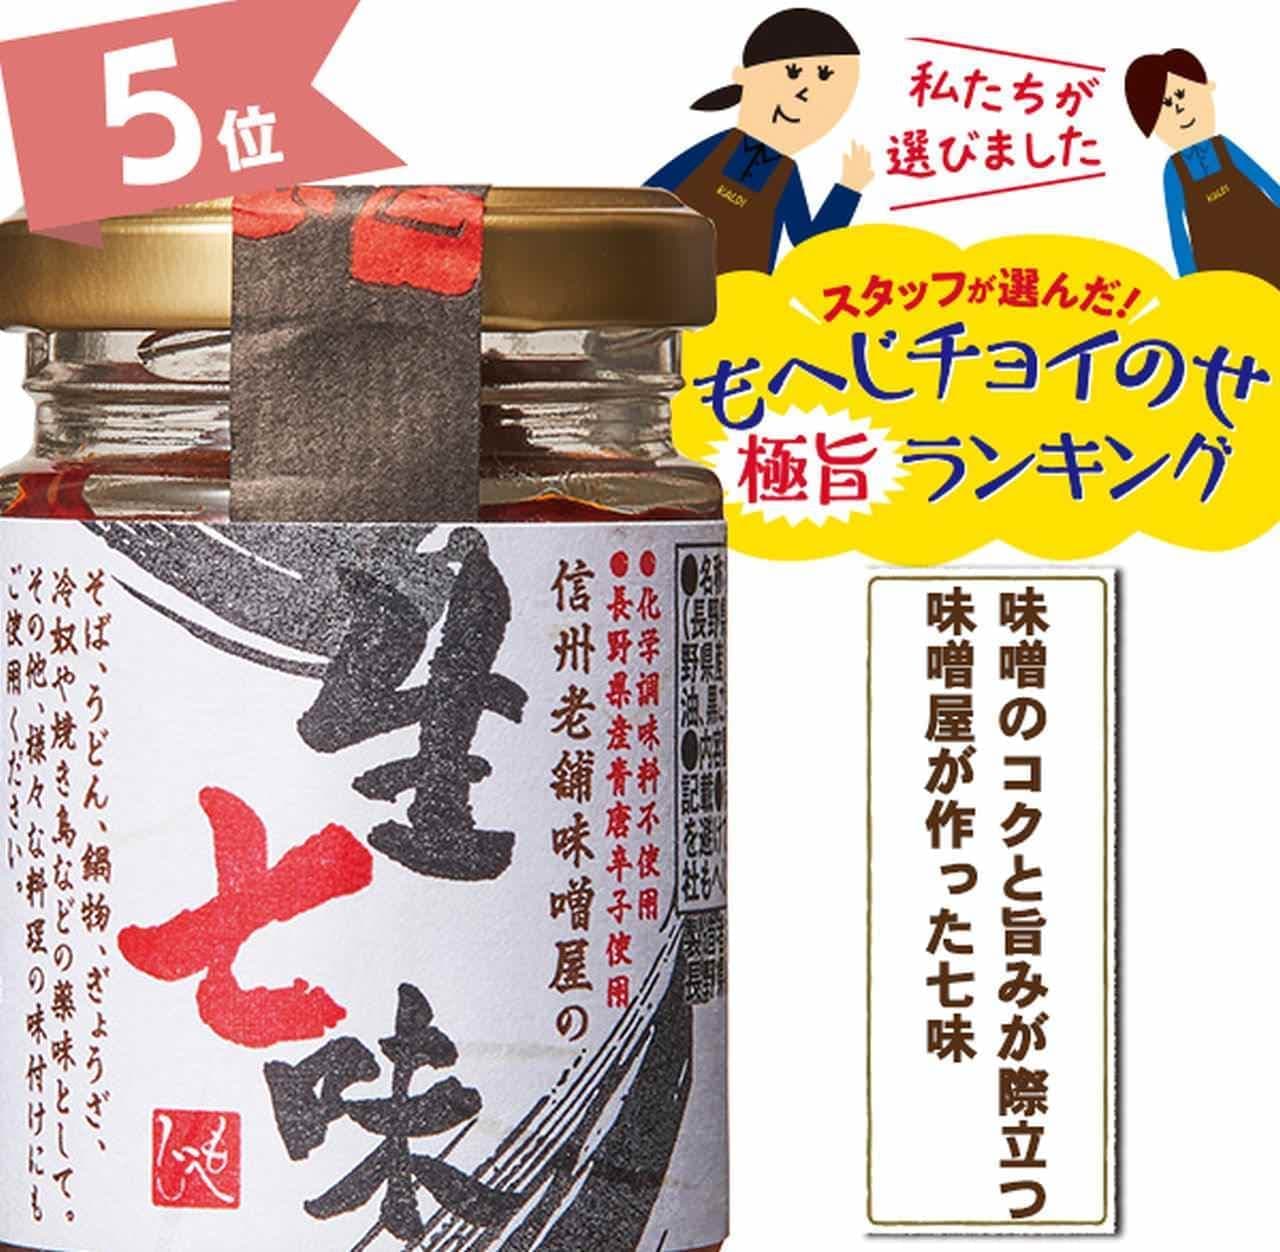 KALDI "Nagano long-established miso shop raw Shichimi"